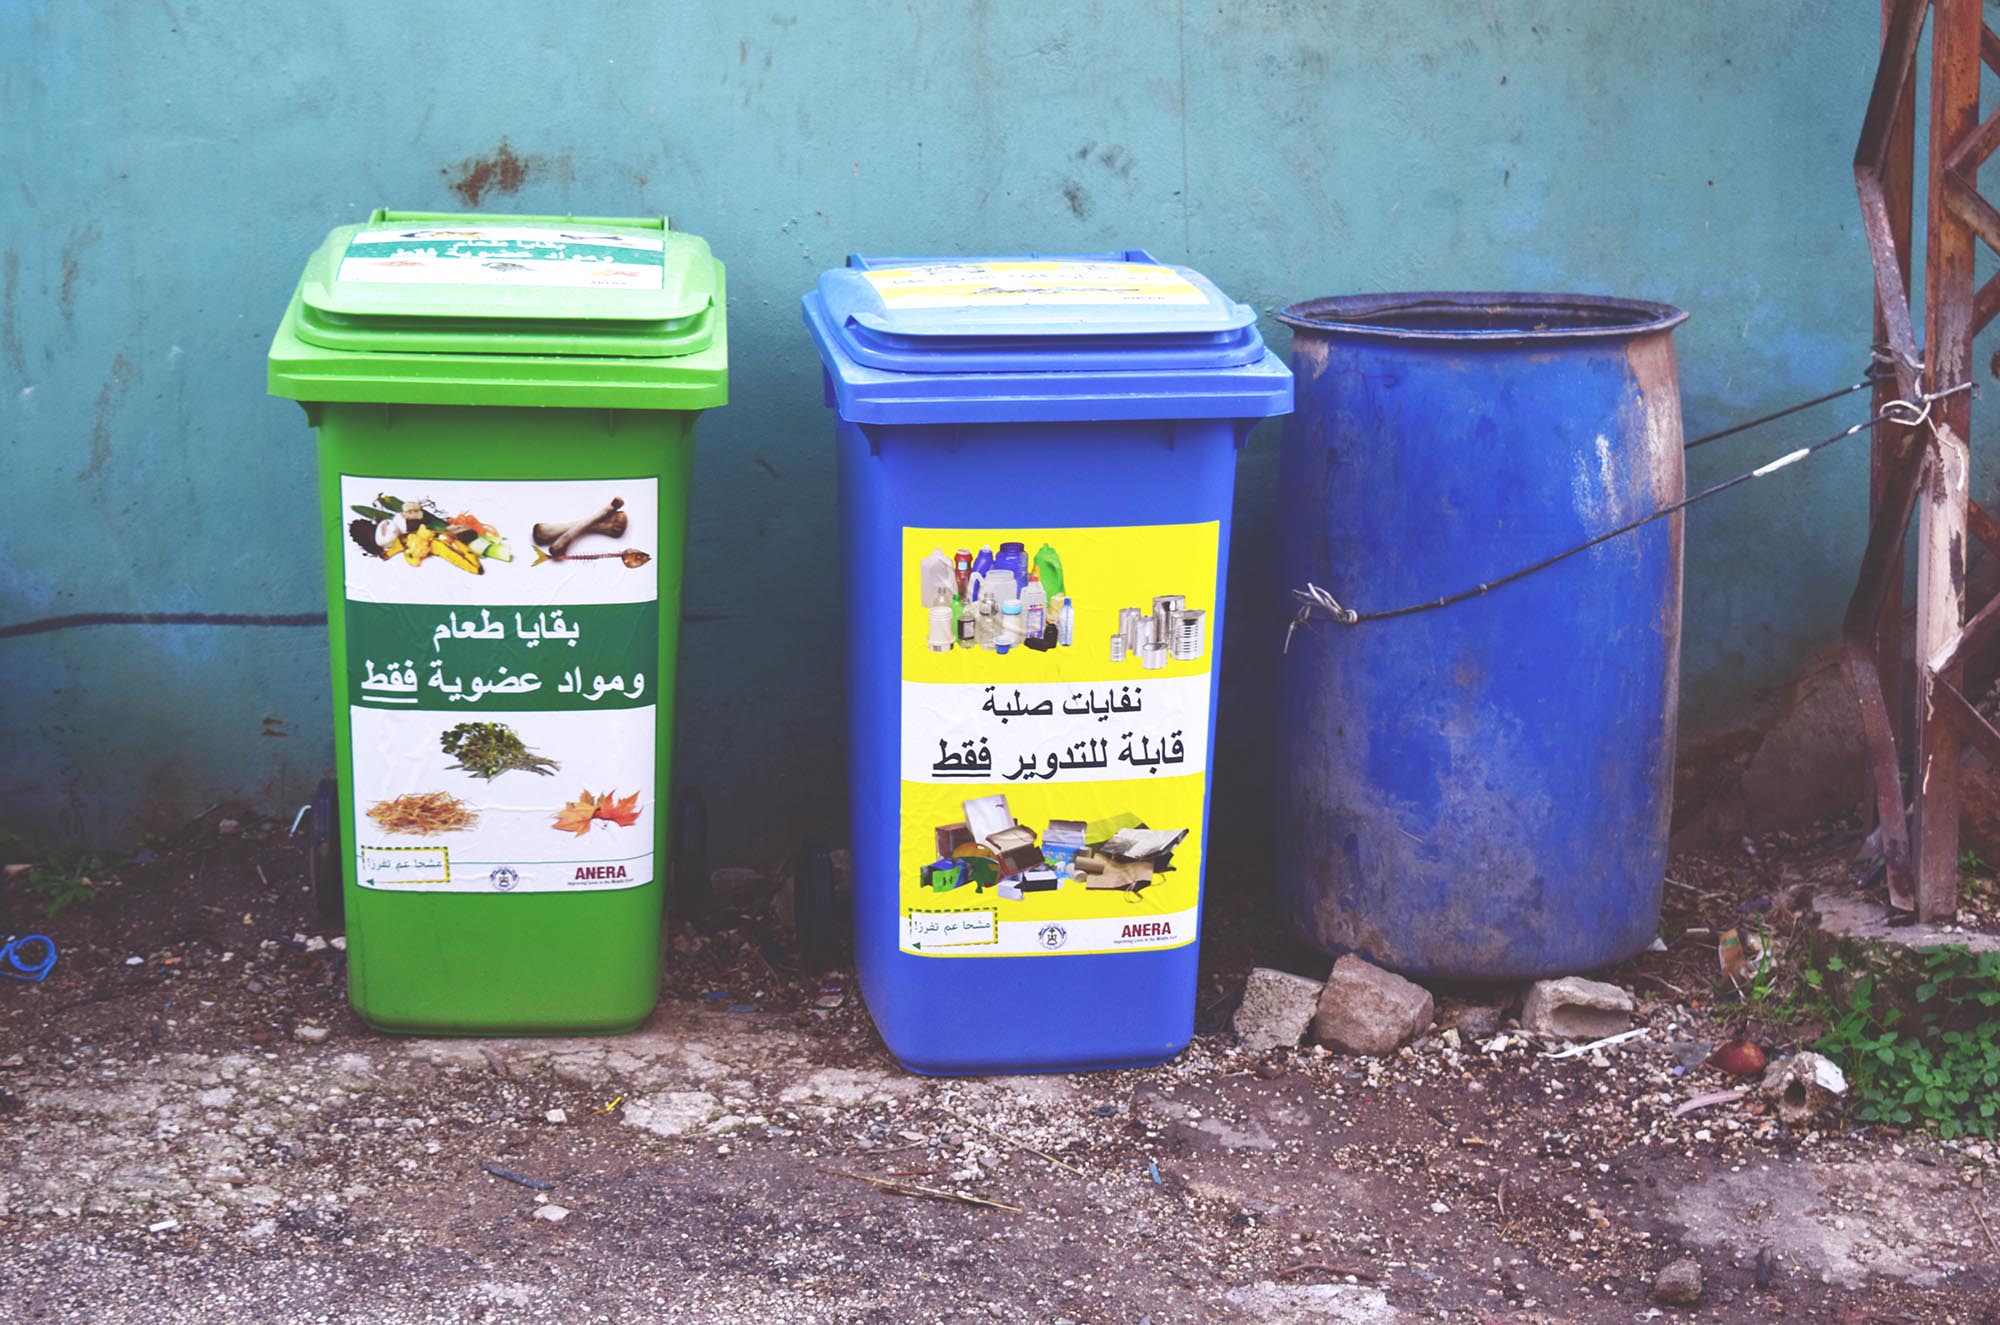 Sorting bins distributed on the streets of Mashha